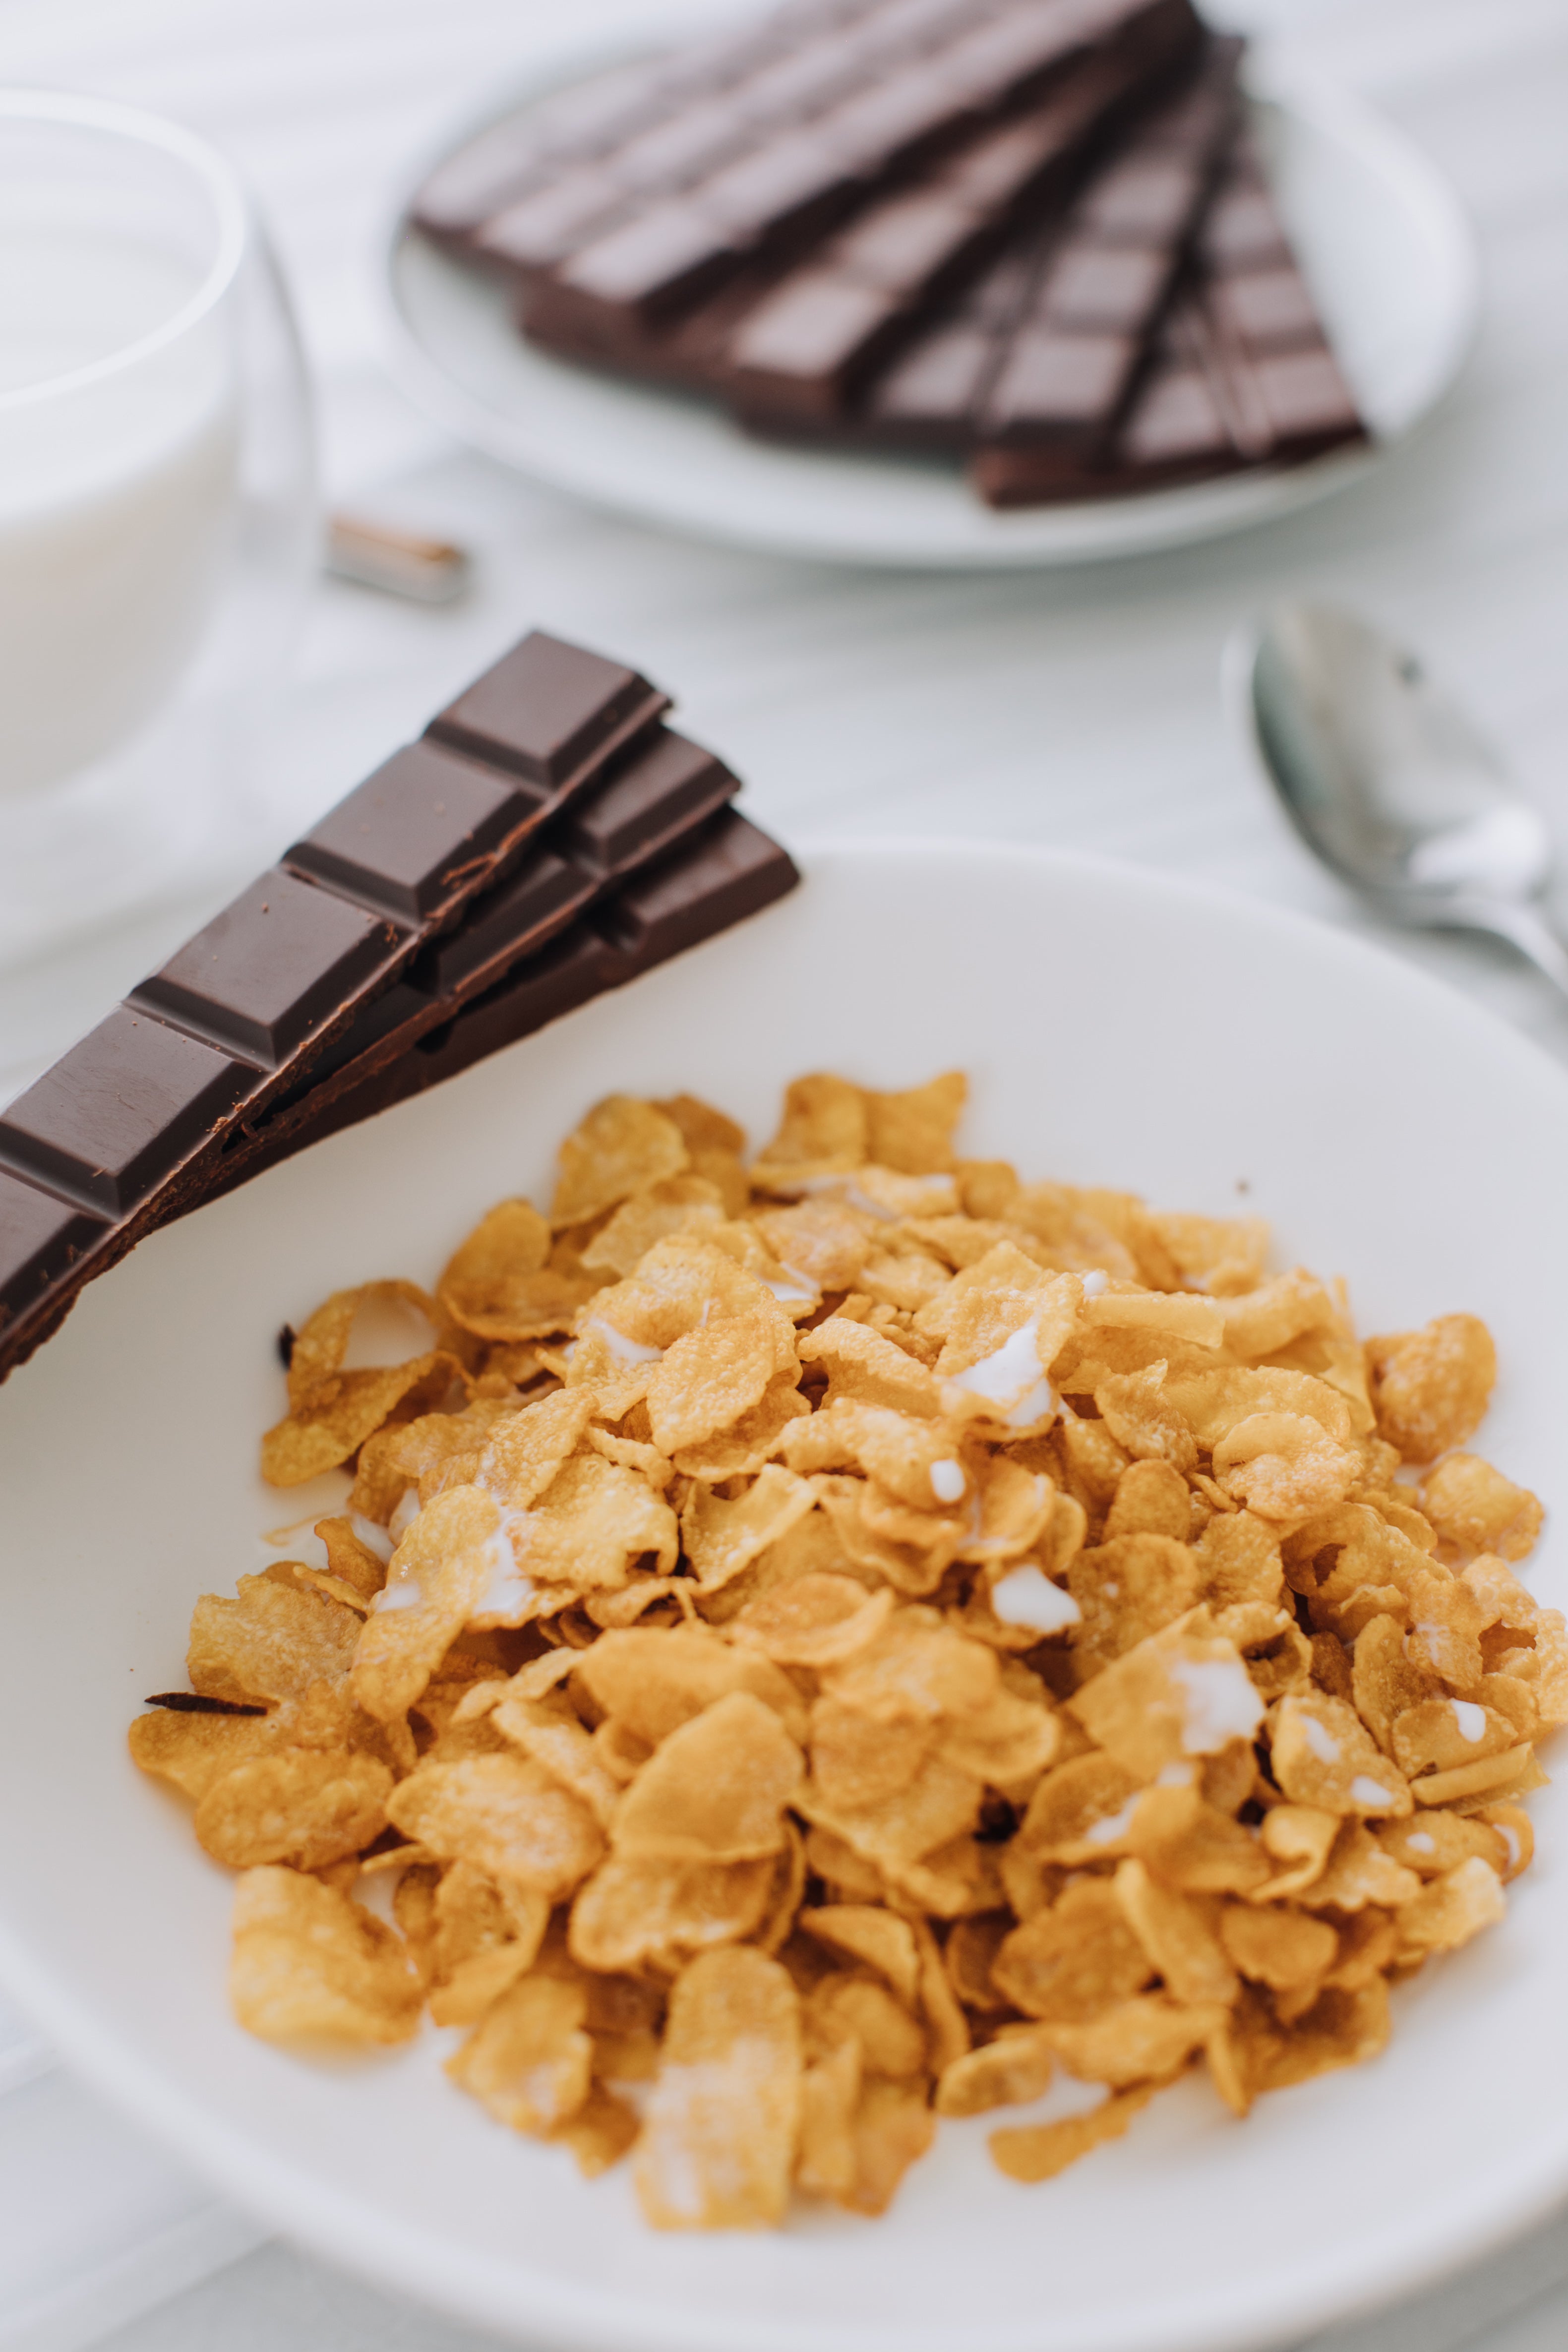 Breakfast Bar: Dark Milk Chocolate with Cereal